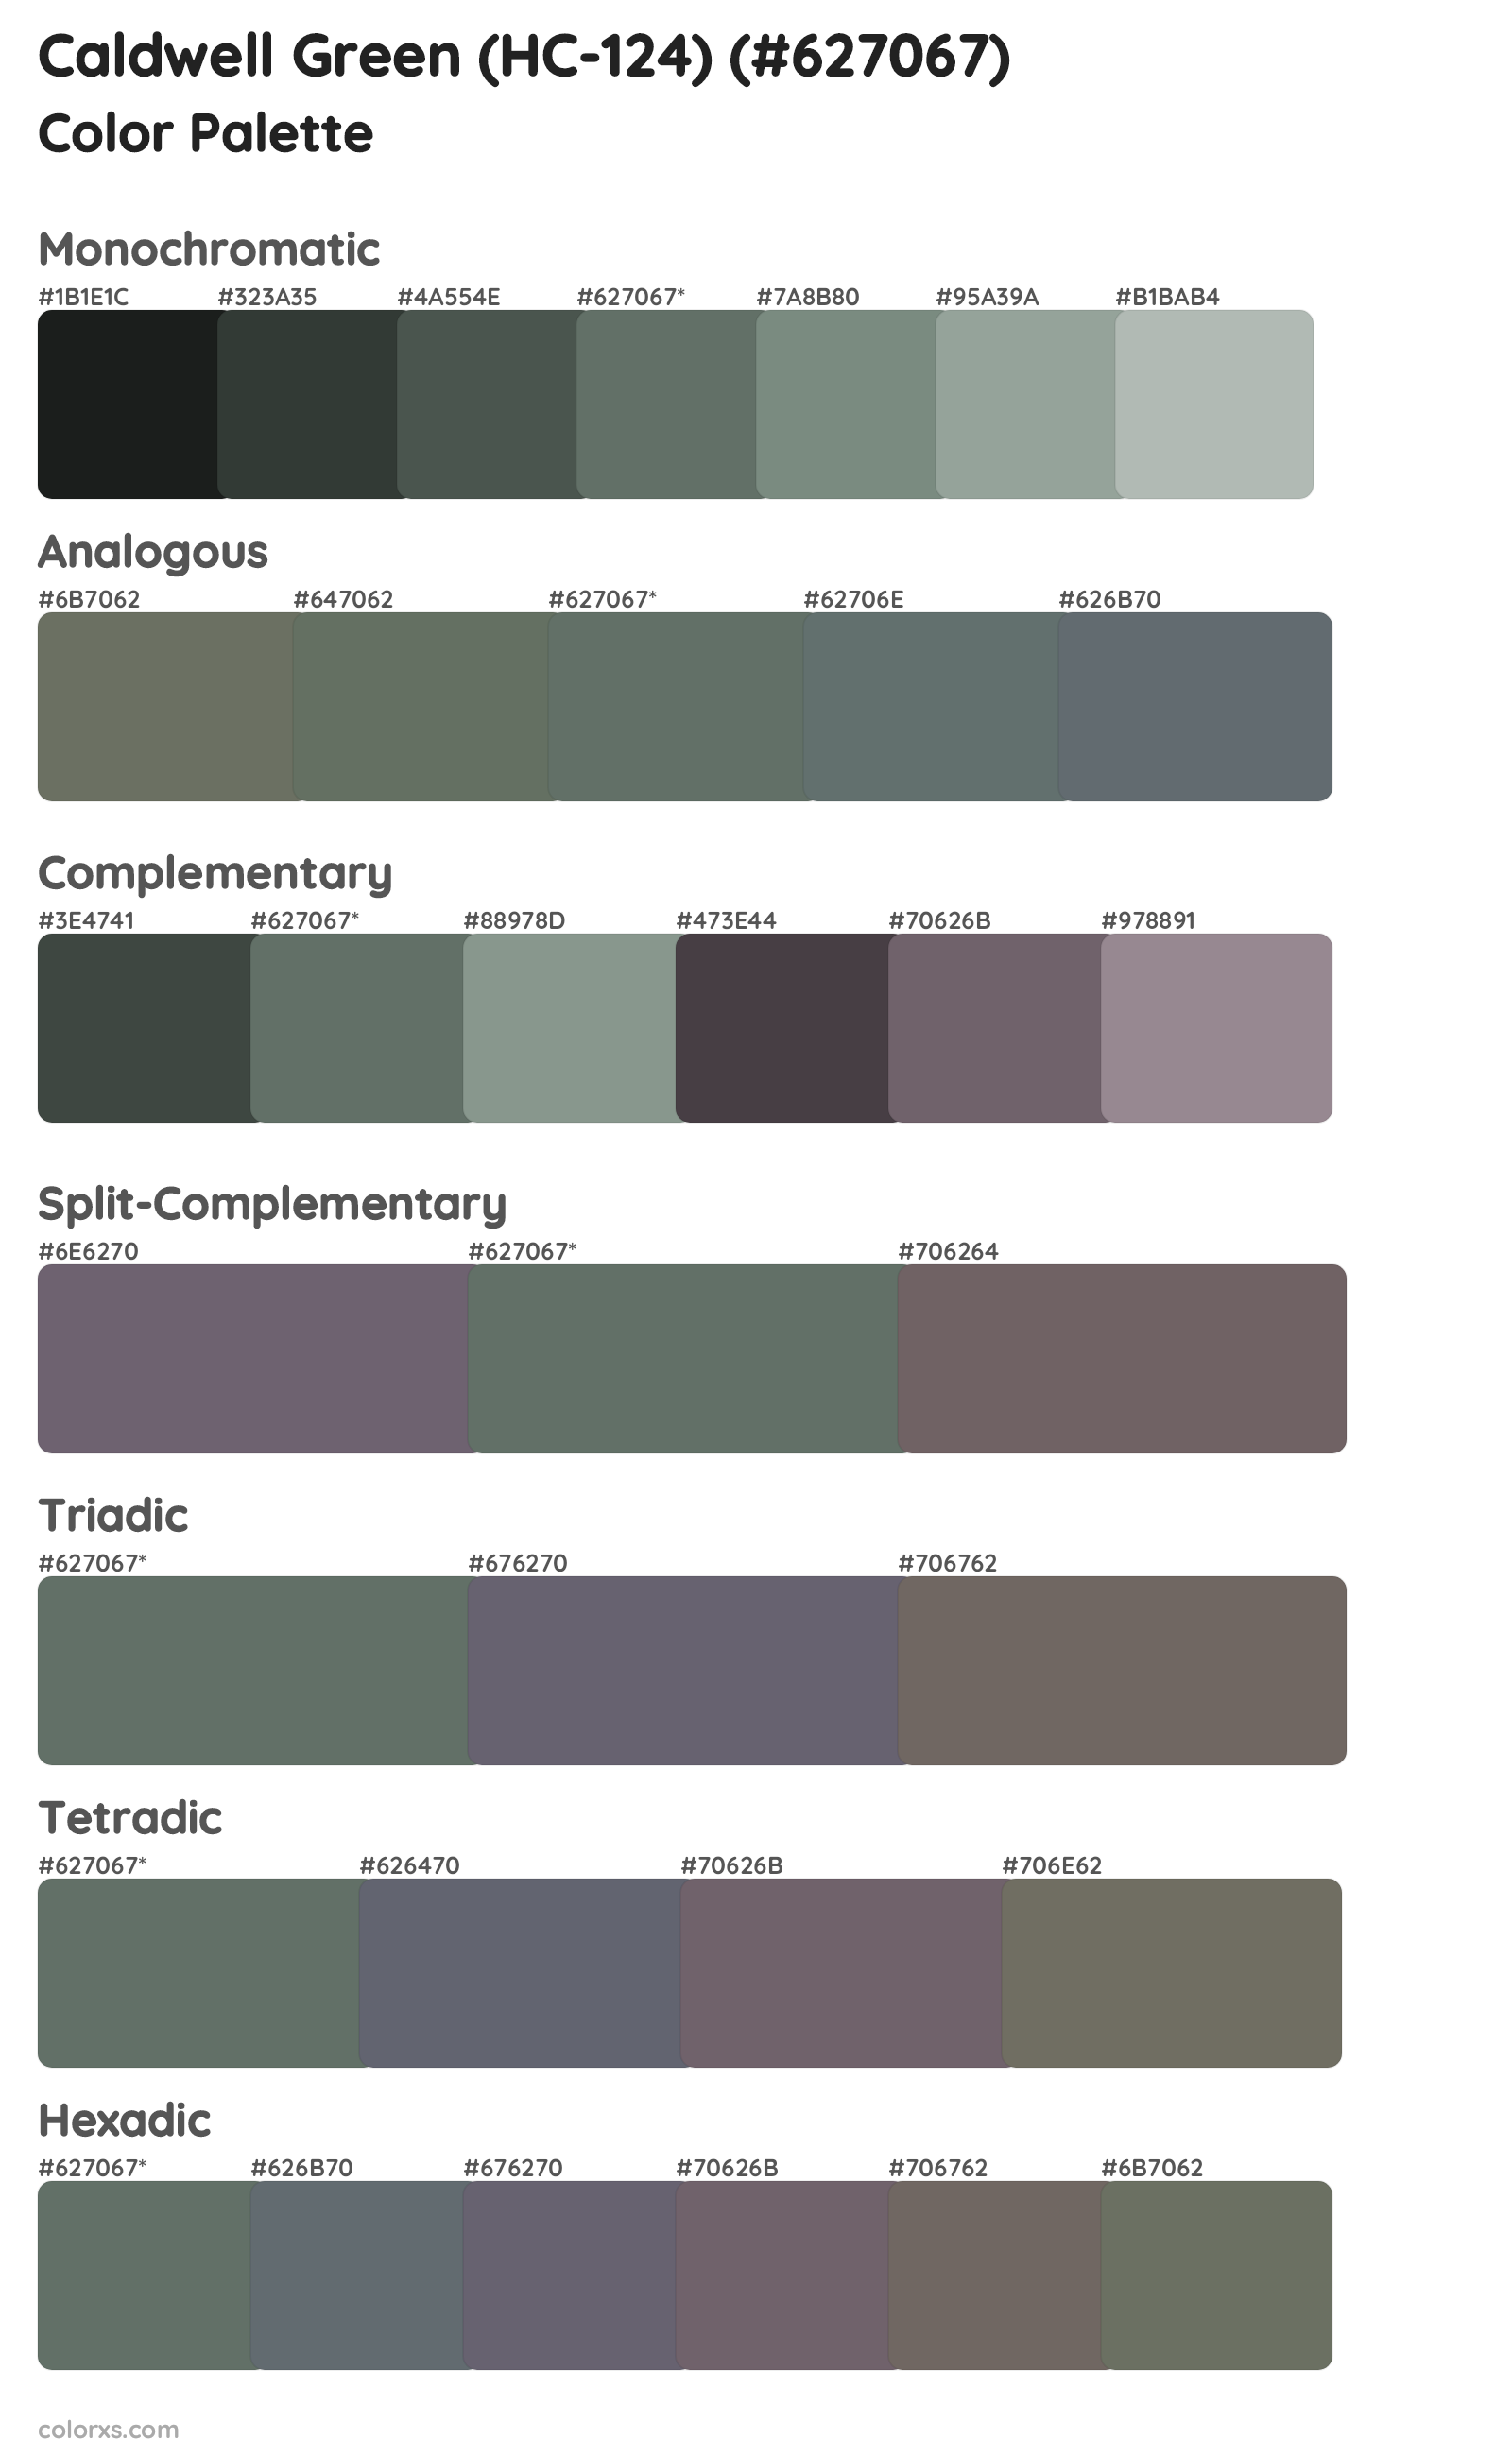 Caldwell Green (HC-124) Color Scheme Palettes